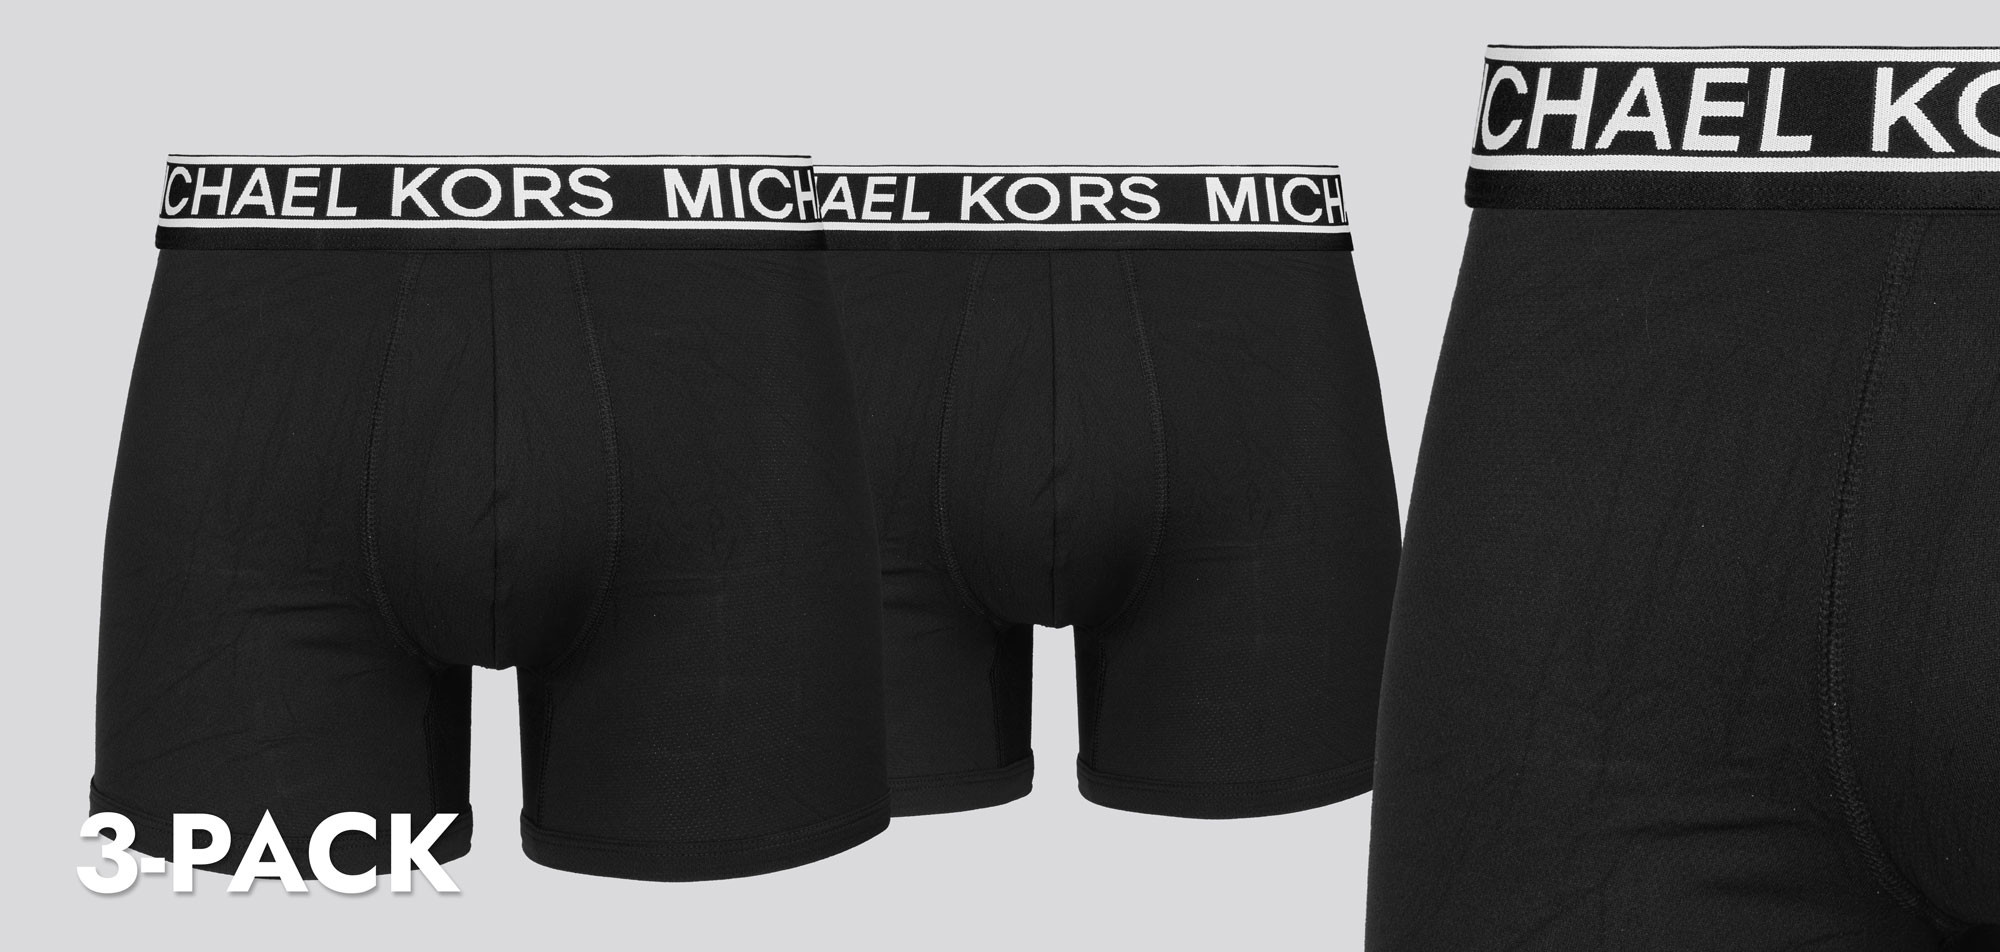 Michael Kors Boxer Brief 3-Pack 133 Mesh Tech,